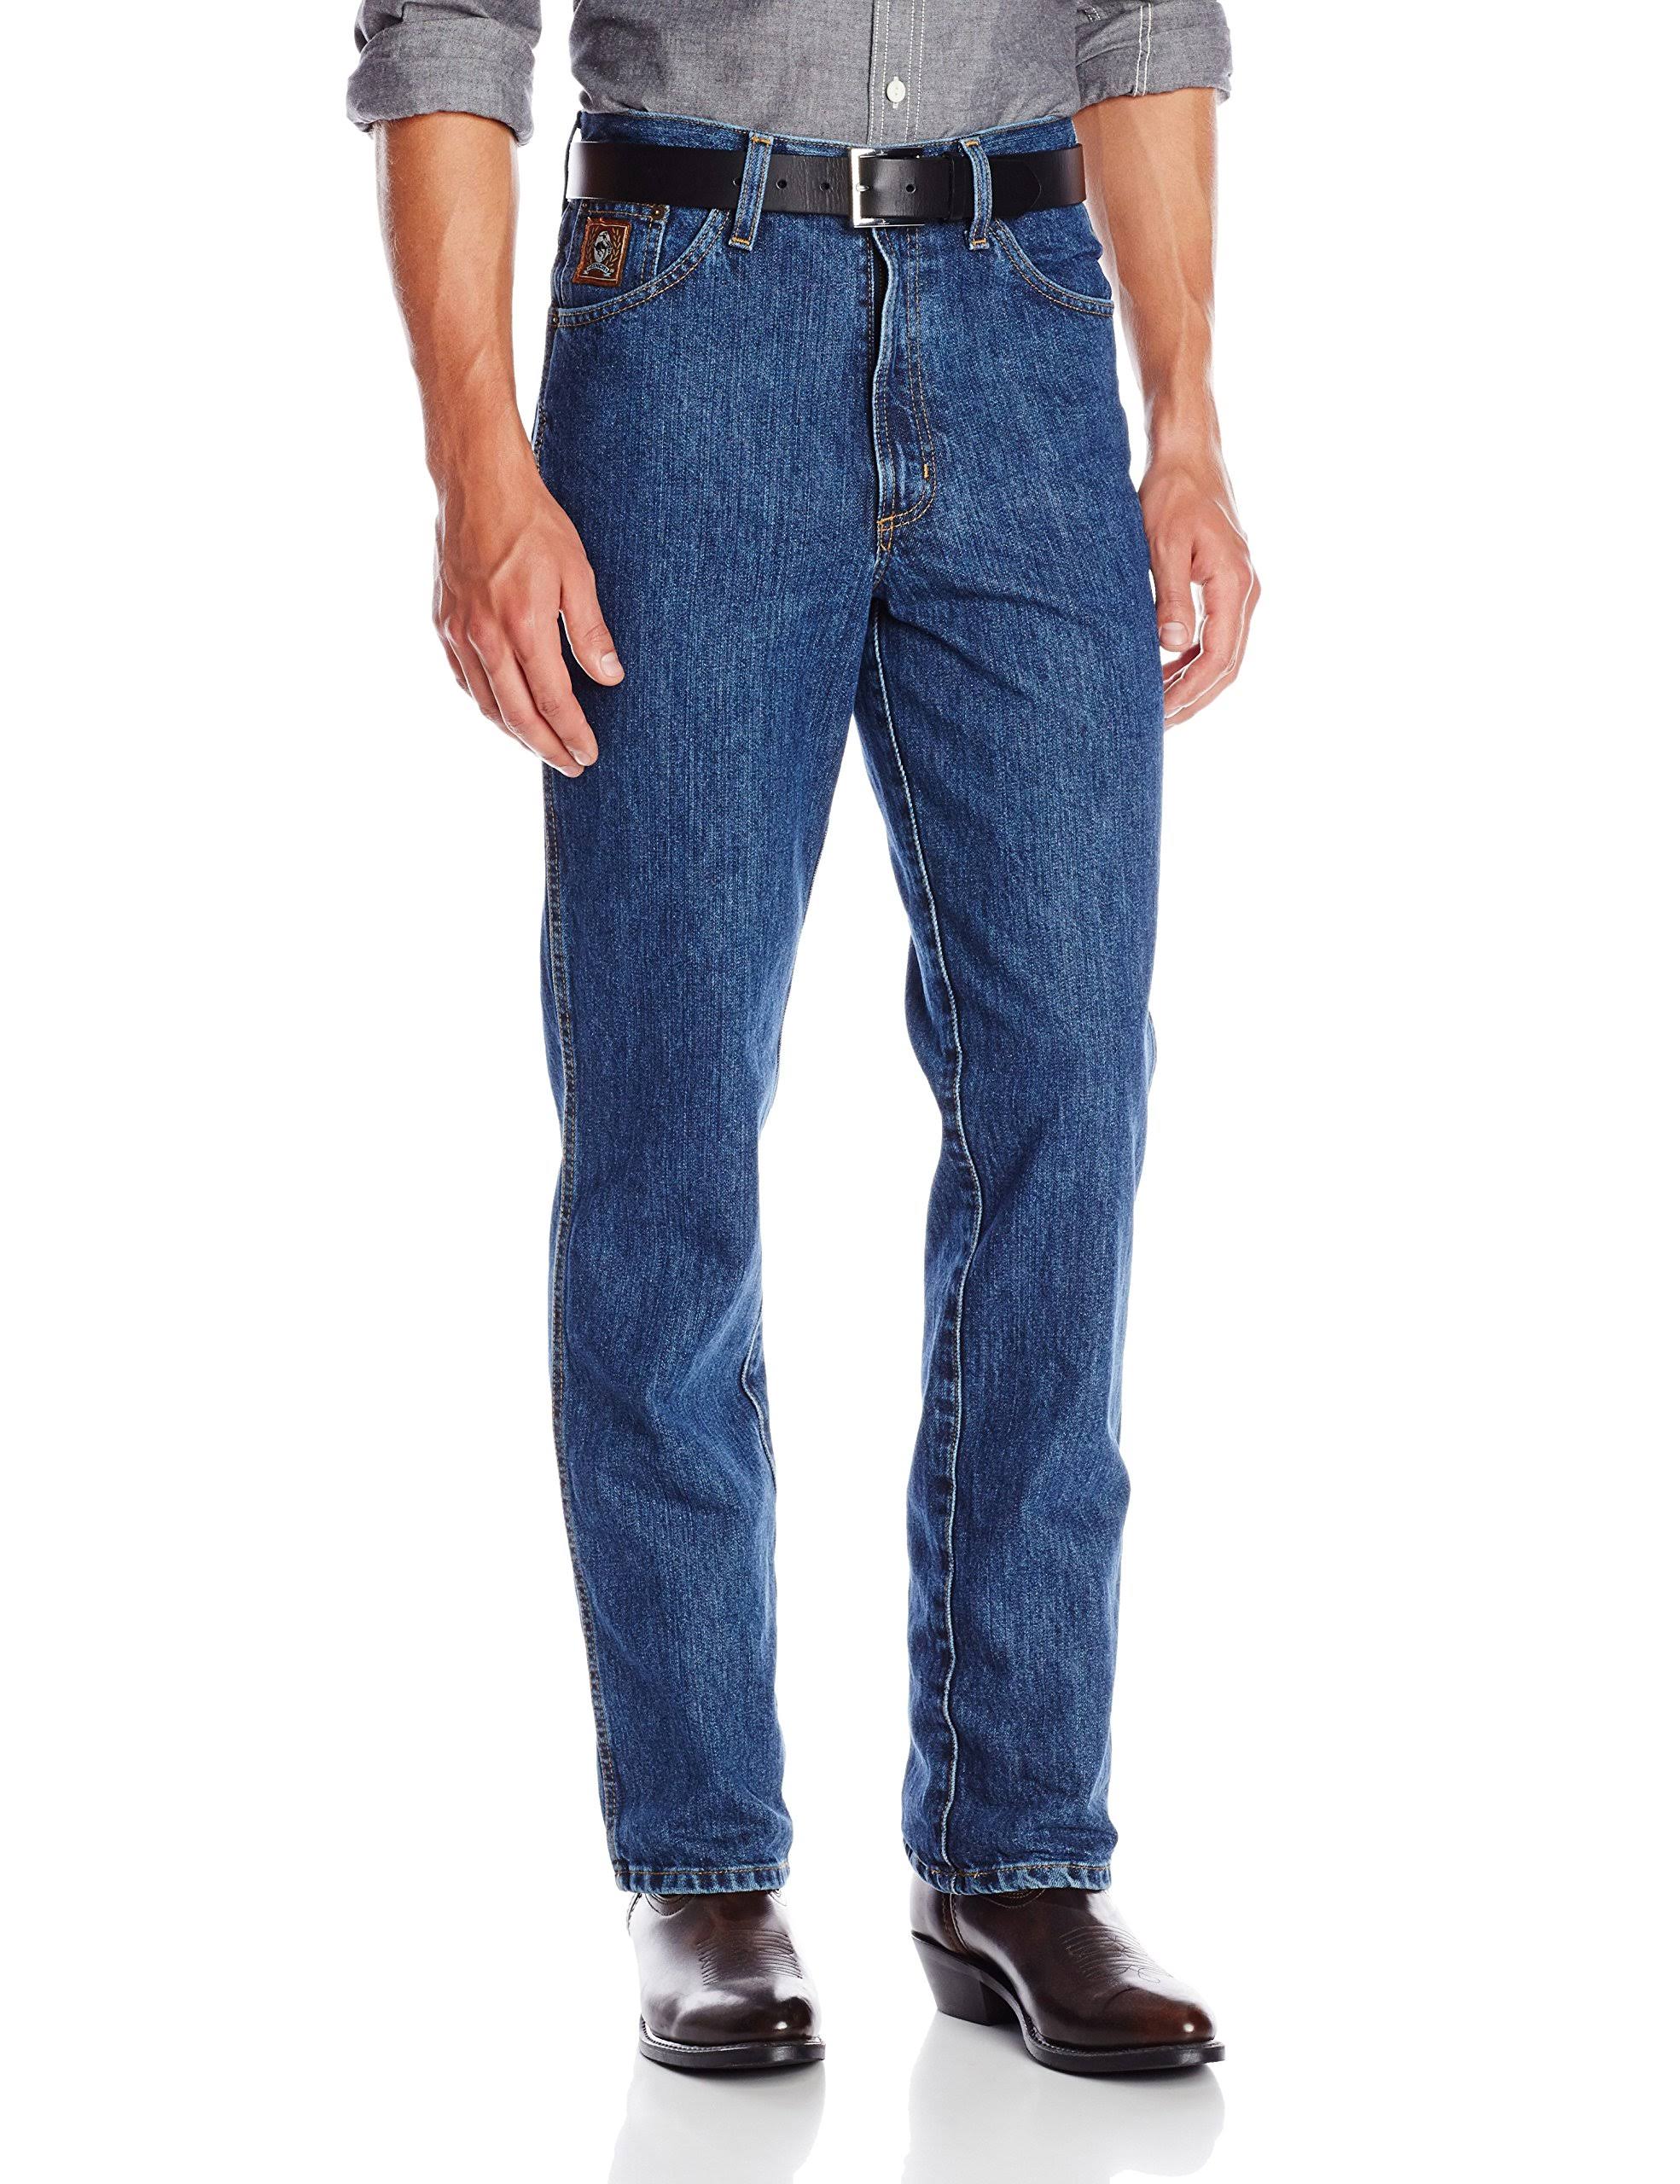 Cinch Jeans - Bronze Label Slim Fit - customprintedsigns